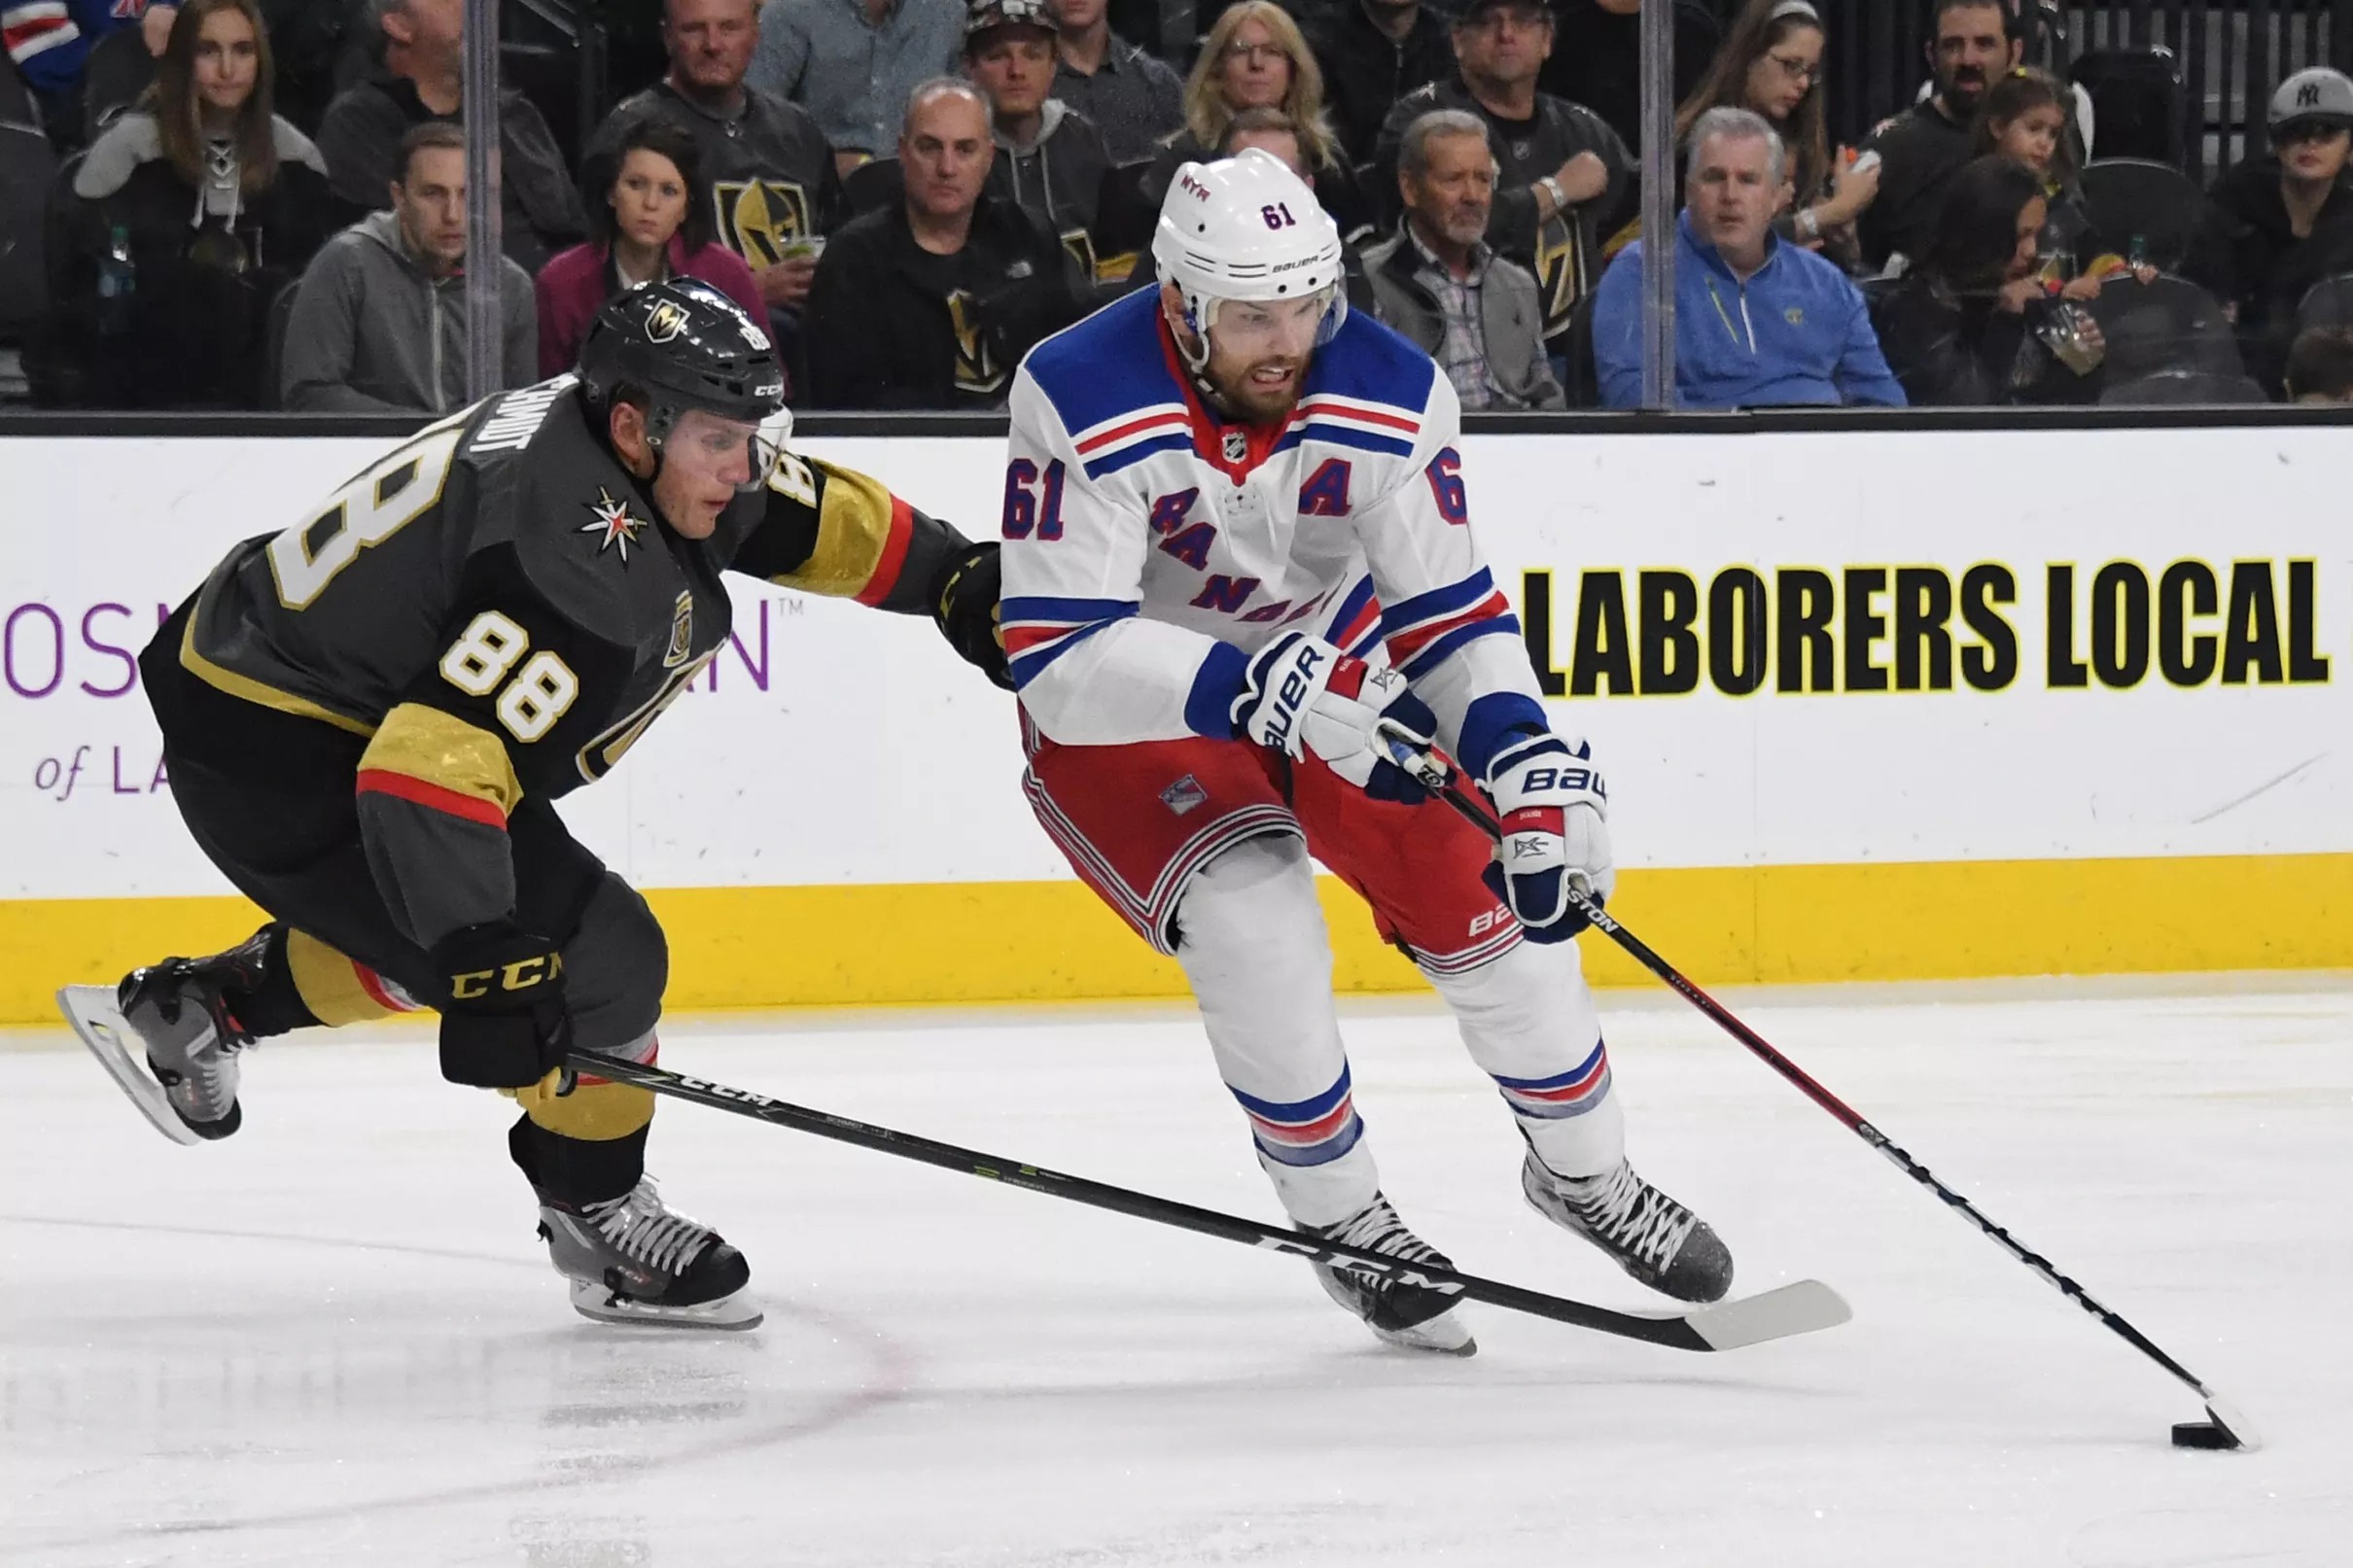 New York Rangers Game Score Report A Recap of Games 41 through 50